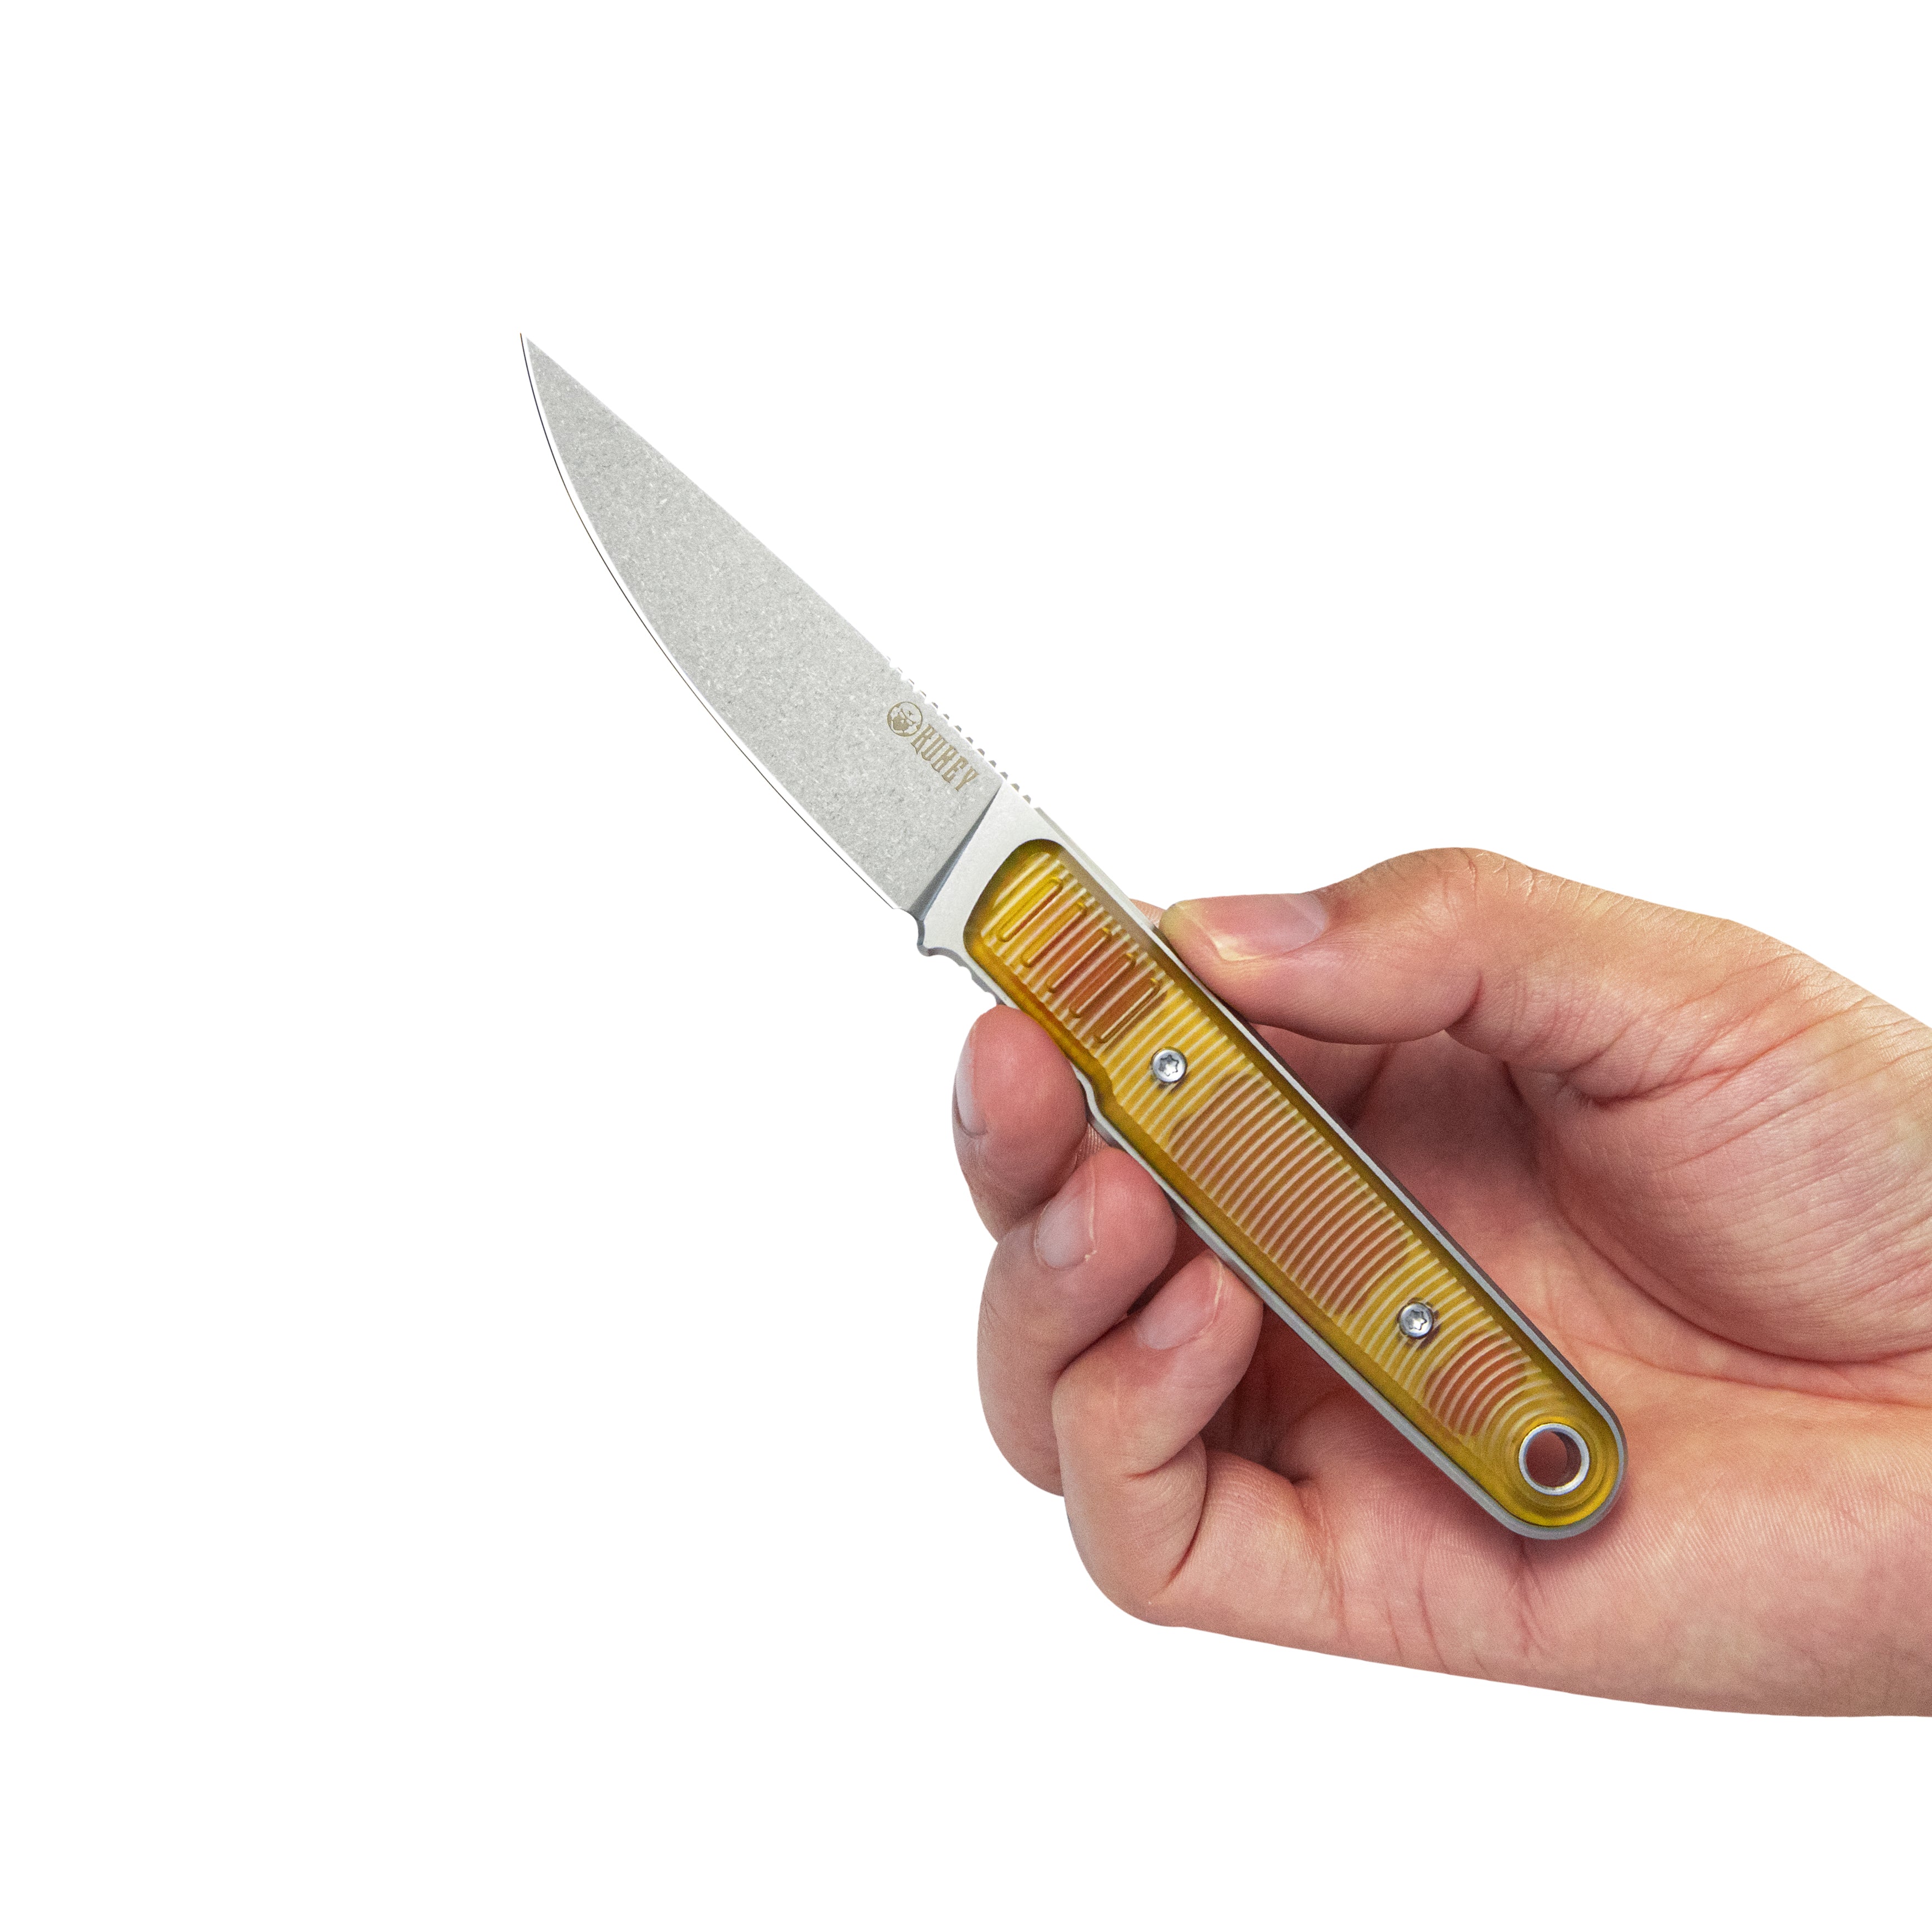 Kubey JL Drop Point Fixie Every Day Carry Fixed Blade Knife Ultem Handle 3.11'' Drop Point Beadblast 14C28N KU356C